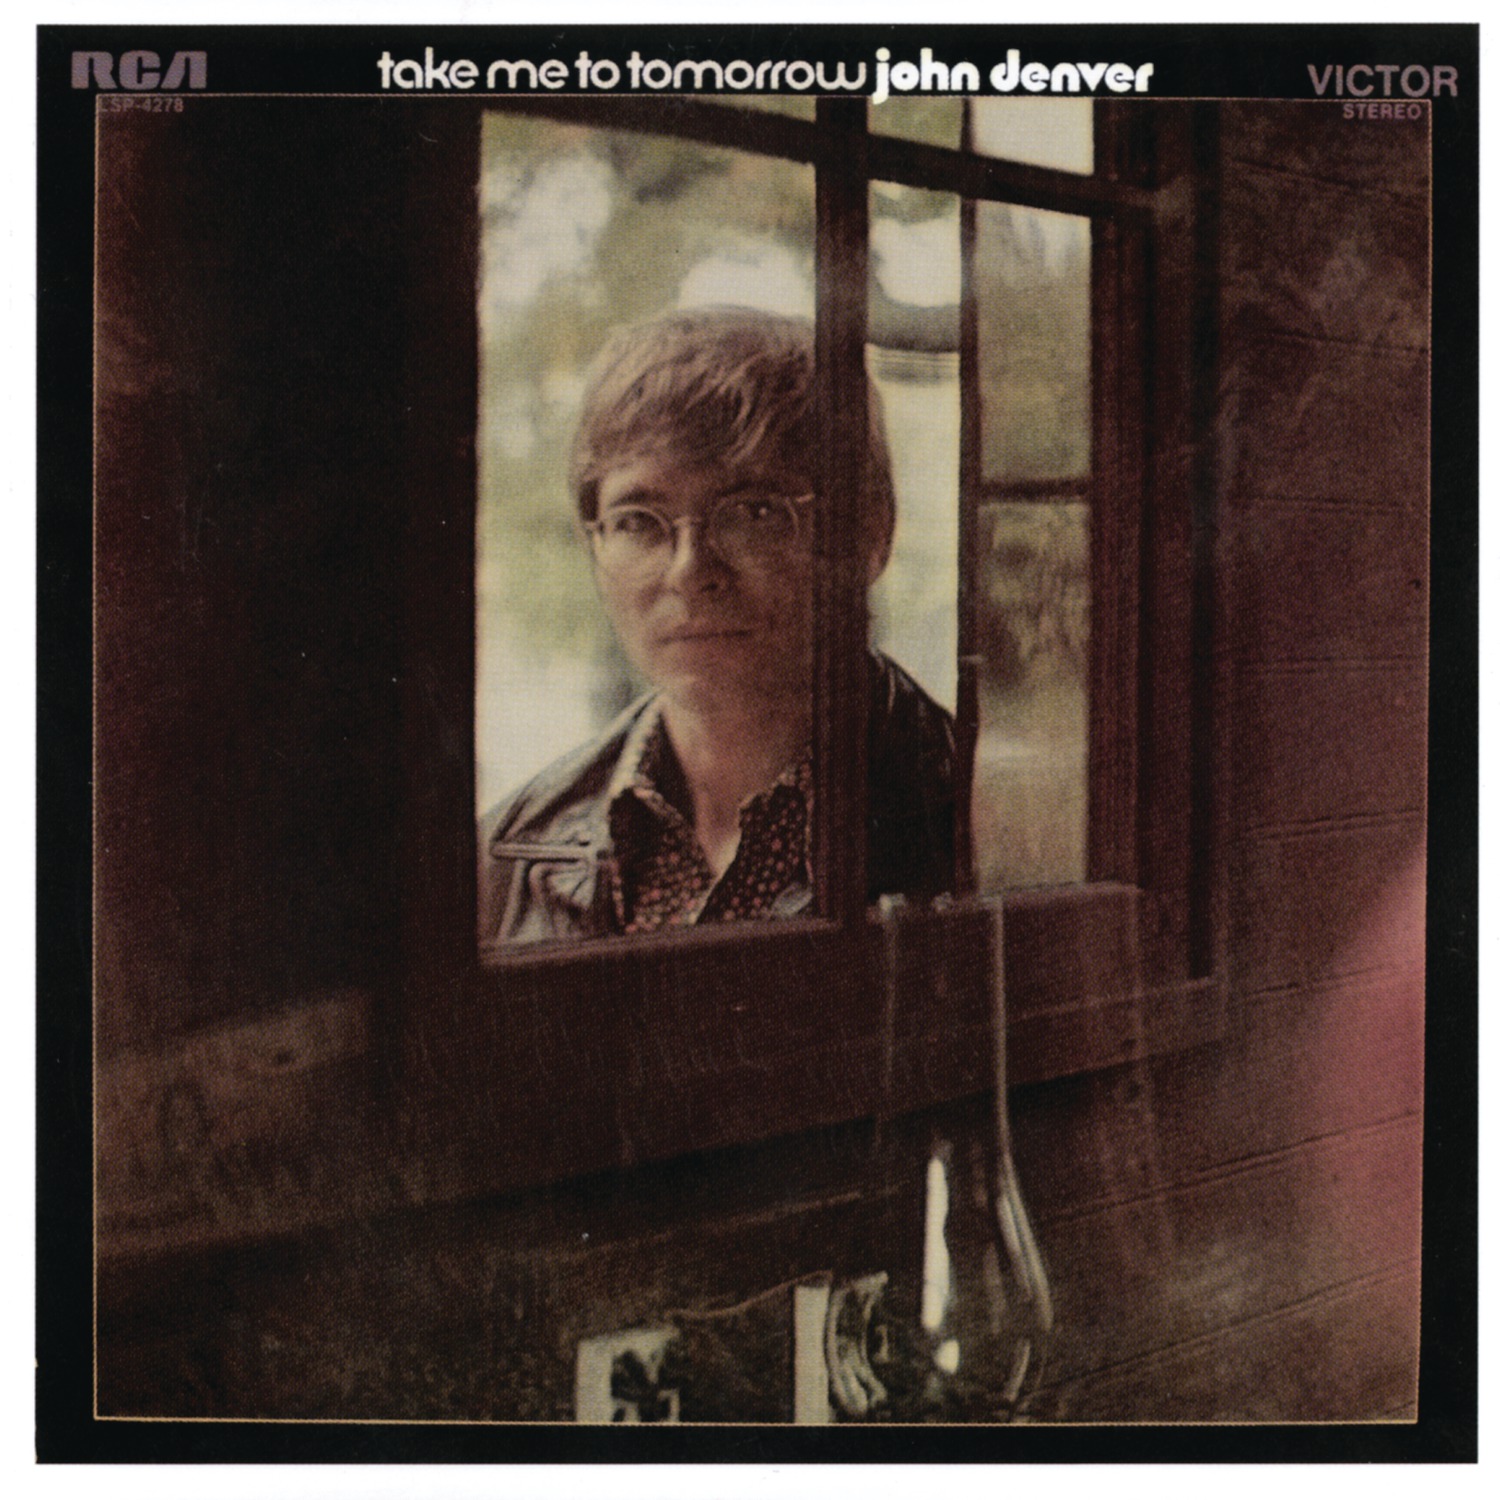 John Denver - Take Me To Tomorrow (1970/2013) [HDTracks FLAC 24bit/96kHz]